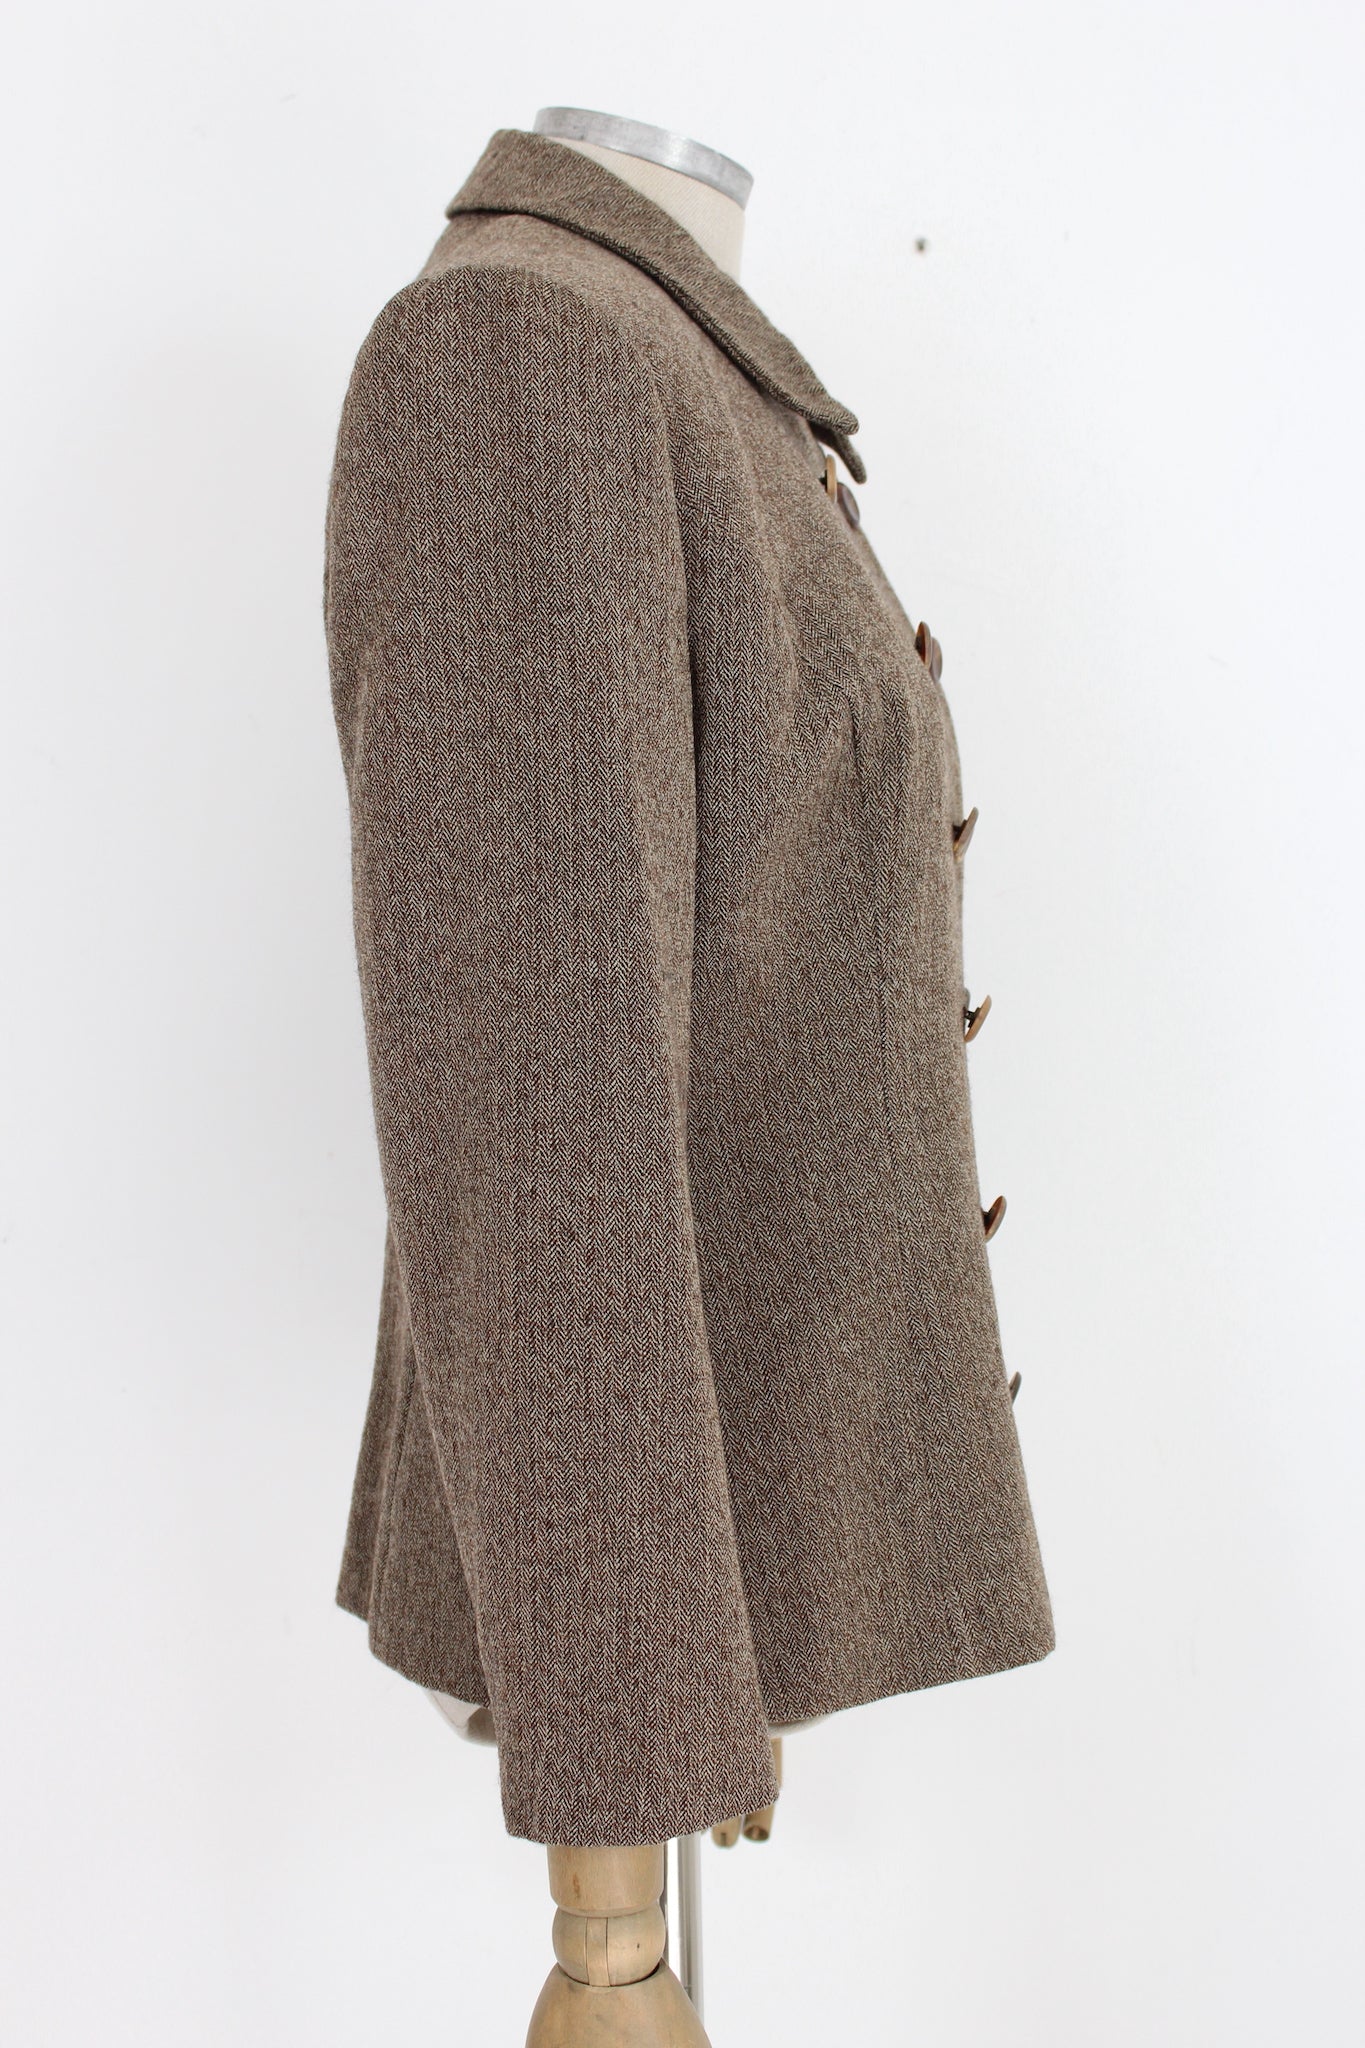 Blumarine Brown Herringbone Classic Coat